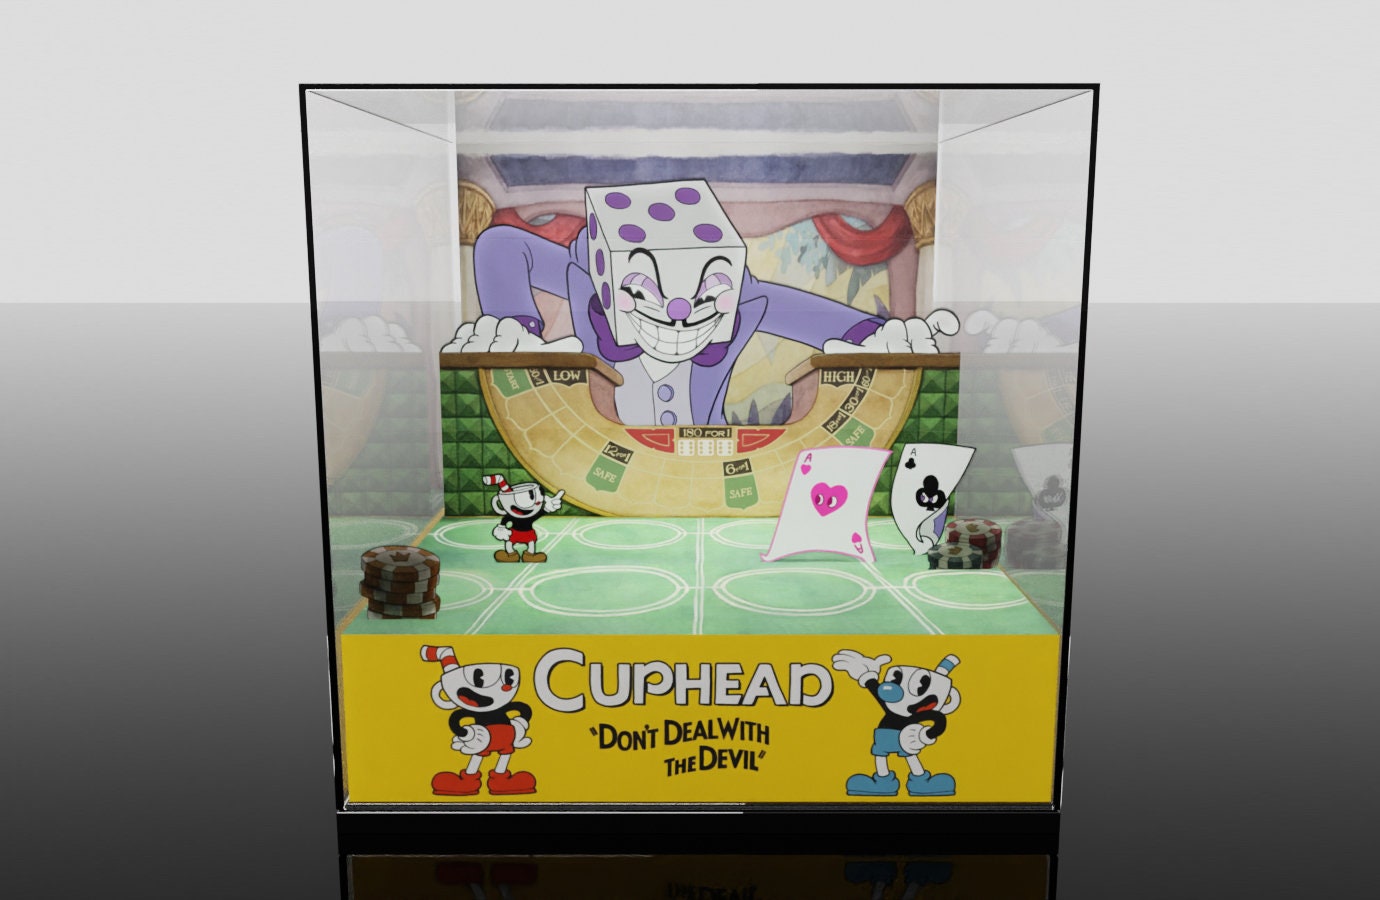 Quadro e poster King Dice - CupHead - Quadrorama